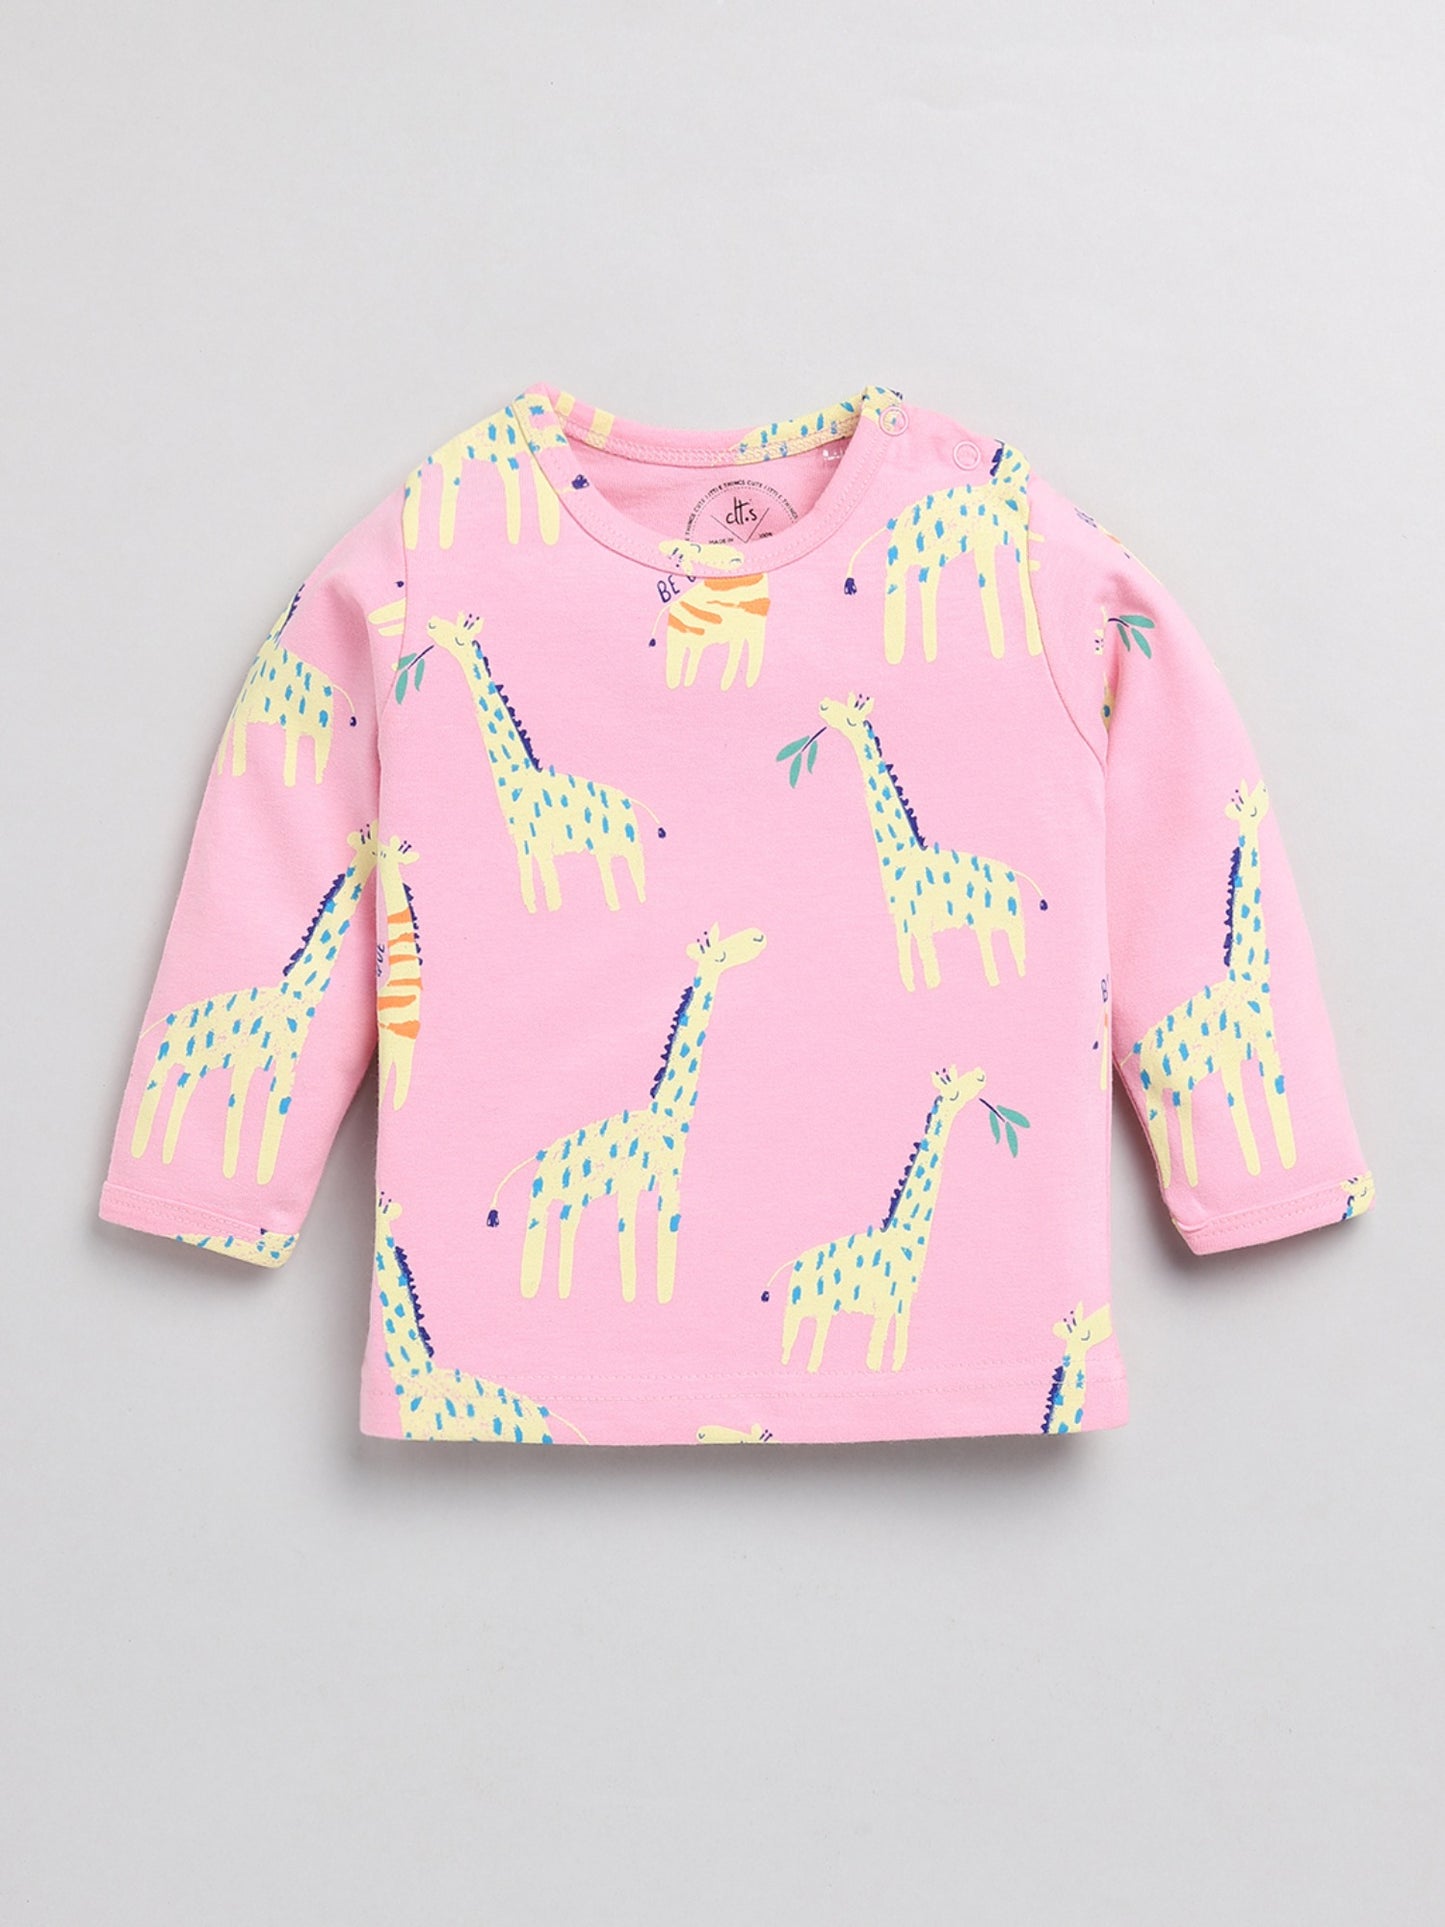 Giraffe Print Pink Cotton Full Sleeve Nightwear Set